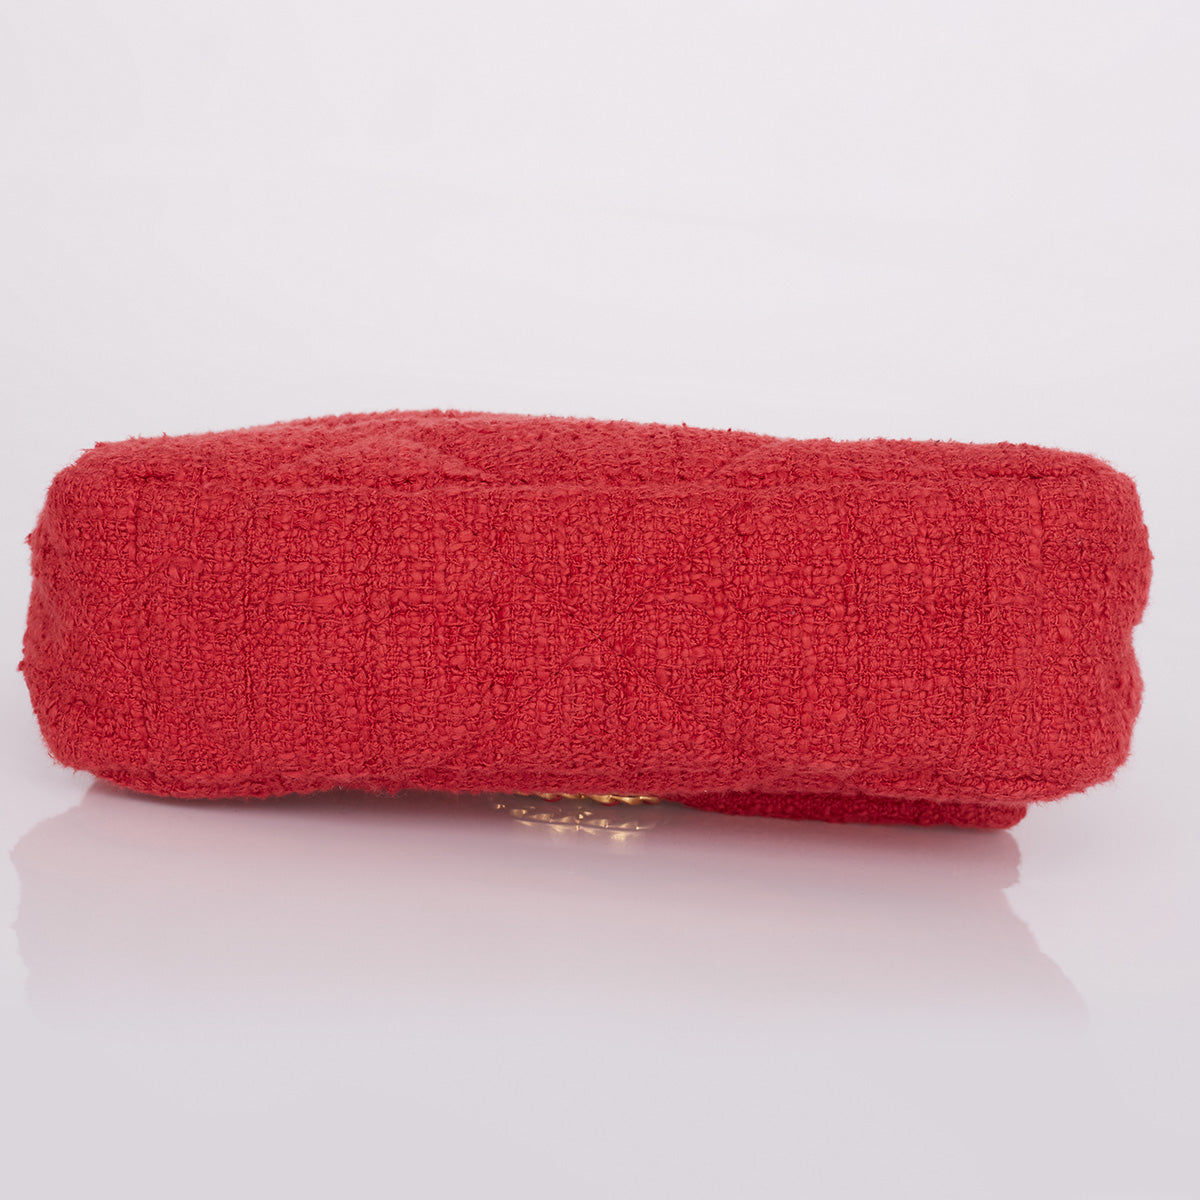 Bolsa Chanel 19 Vermelha Tweed